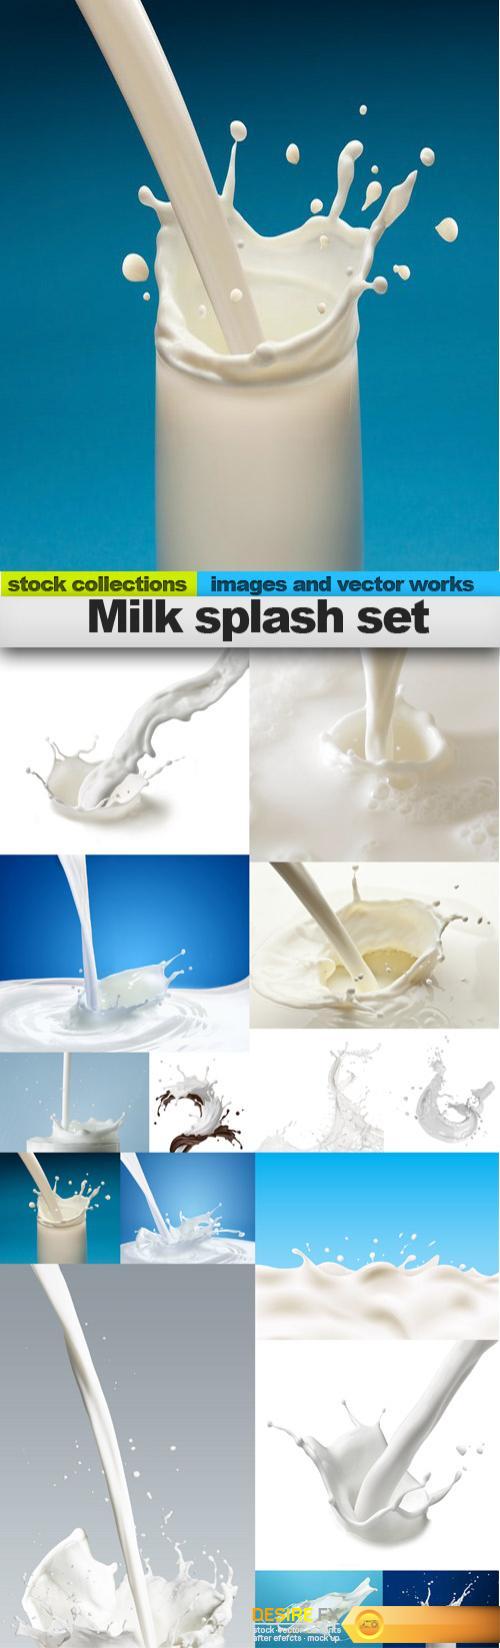 Milk splash set, 15 x UHQ JPEG